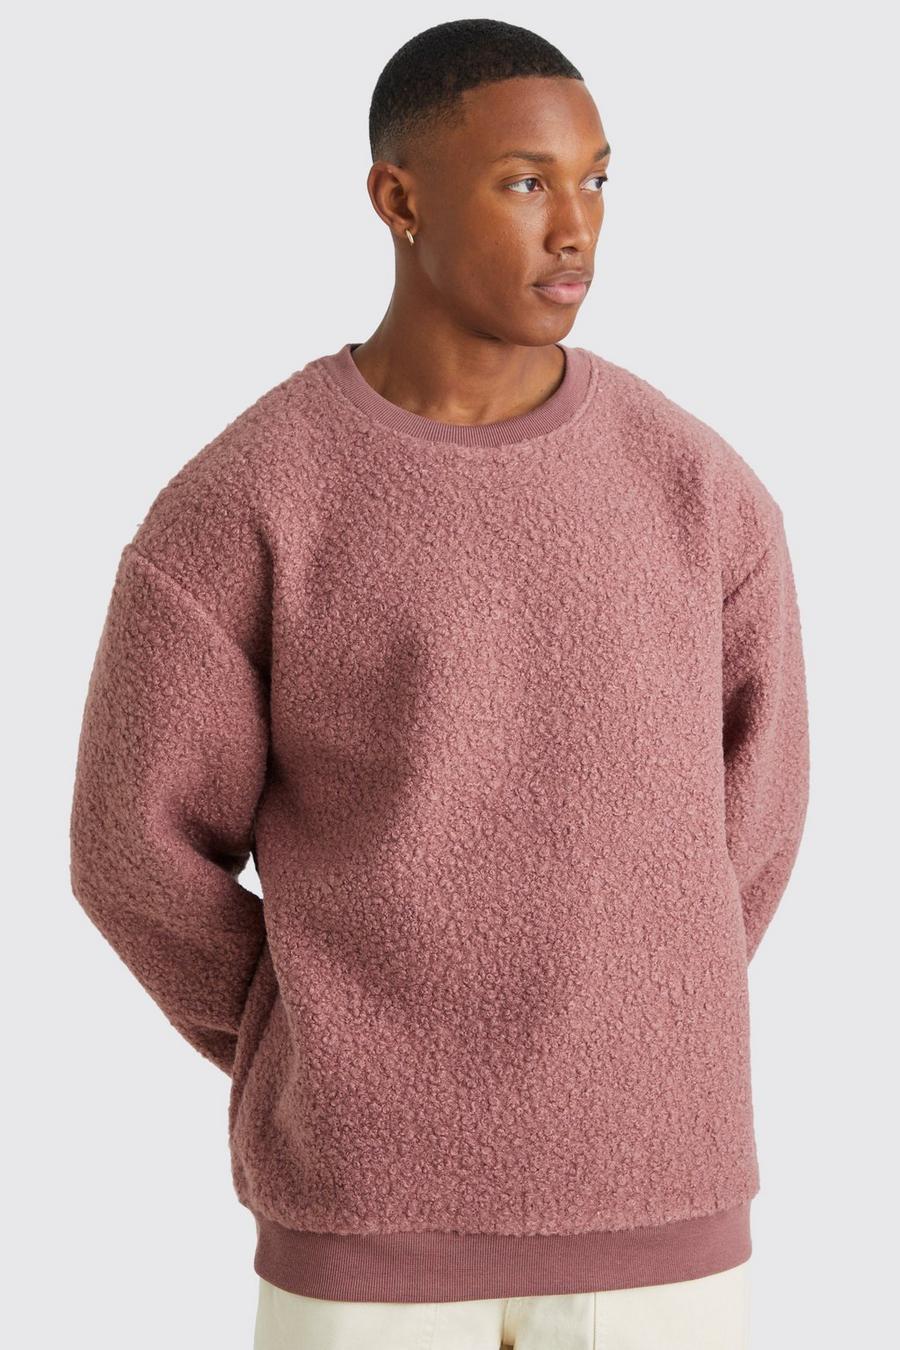 Men's Oversized Boucle Crew Sweater, Men's Clearance